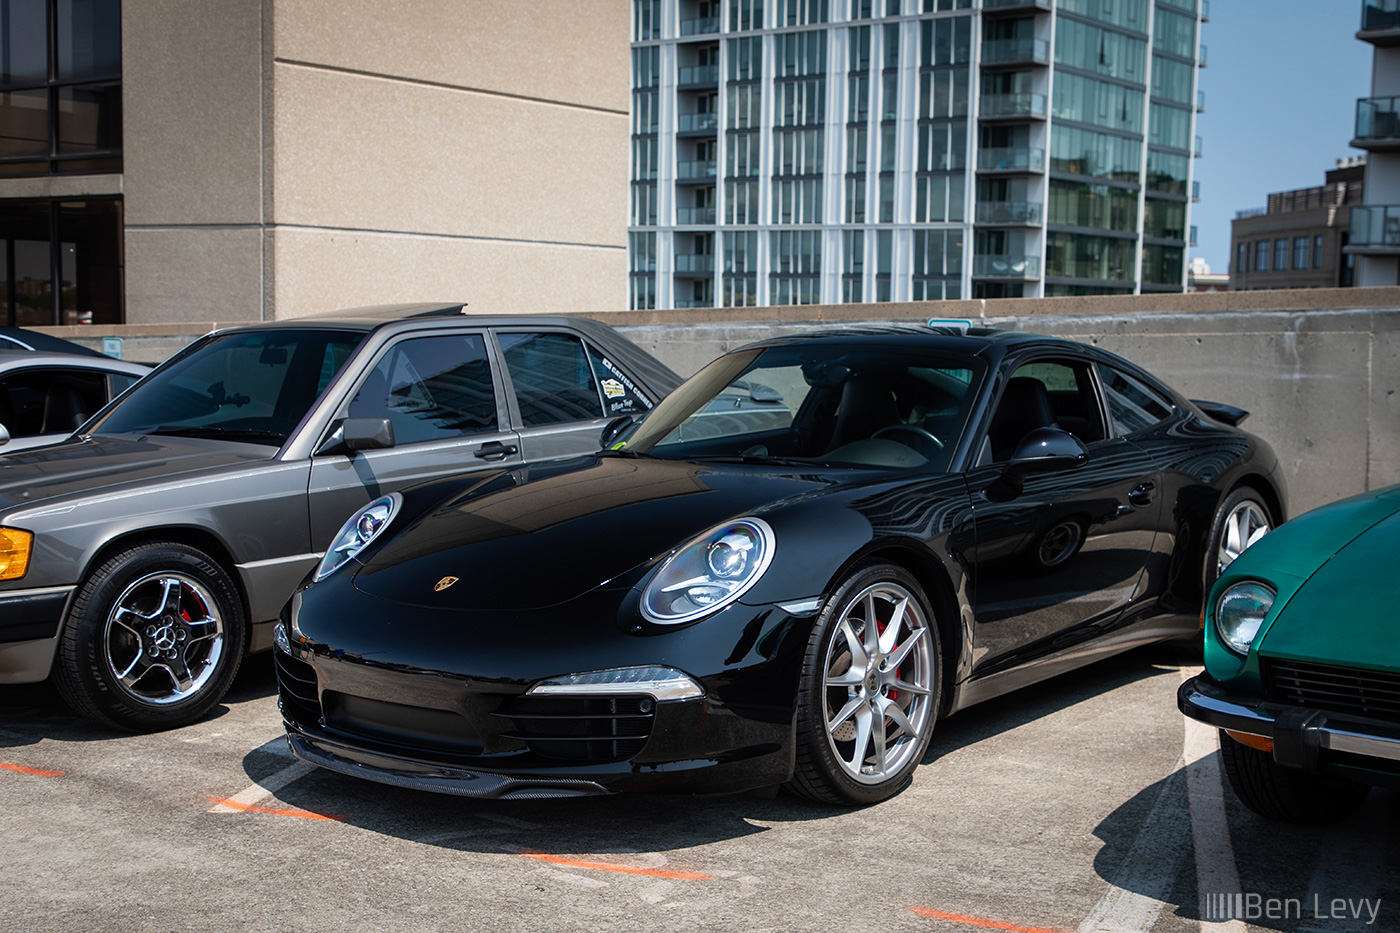 Black Porsche 911 at Lincoln Park Car Meet